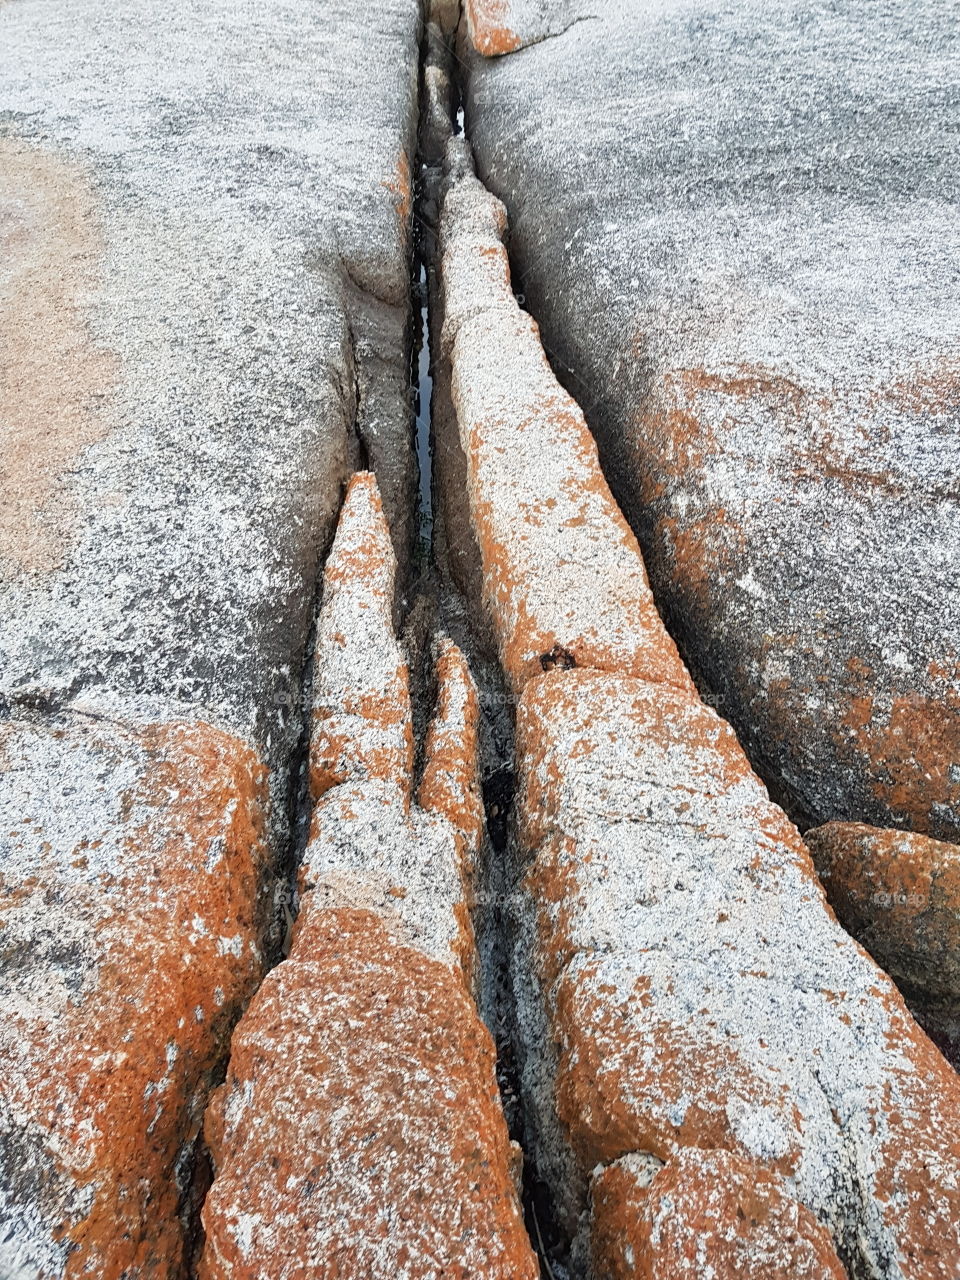 Interesting textured rocks